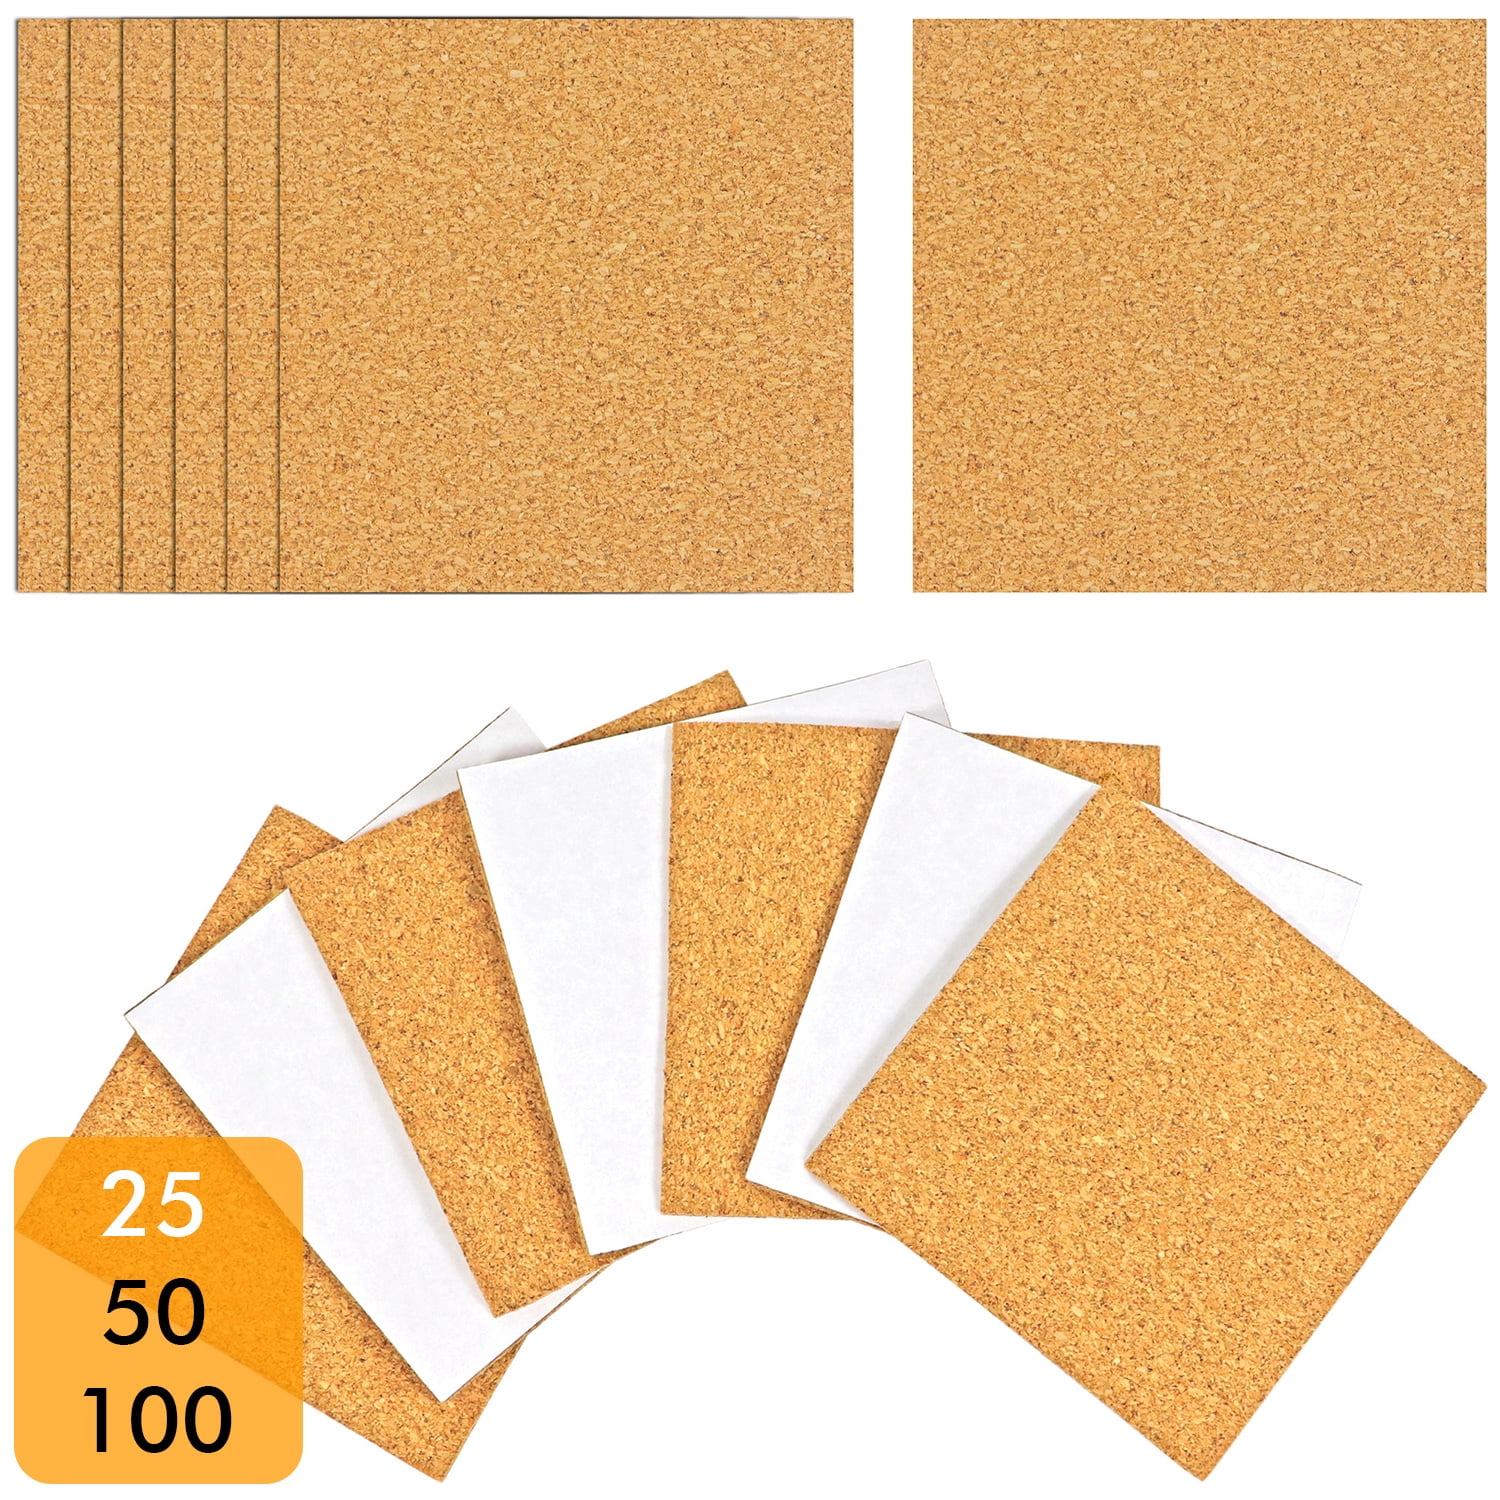 SHEUTSAN 240 Pcs 4 x 4 inch Self Adhesive Cork Round, Cork Adhesive Sheets Blank Non Slip Cork Backing Sheets Mini Cork Tiles Mat for Coasters Wall